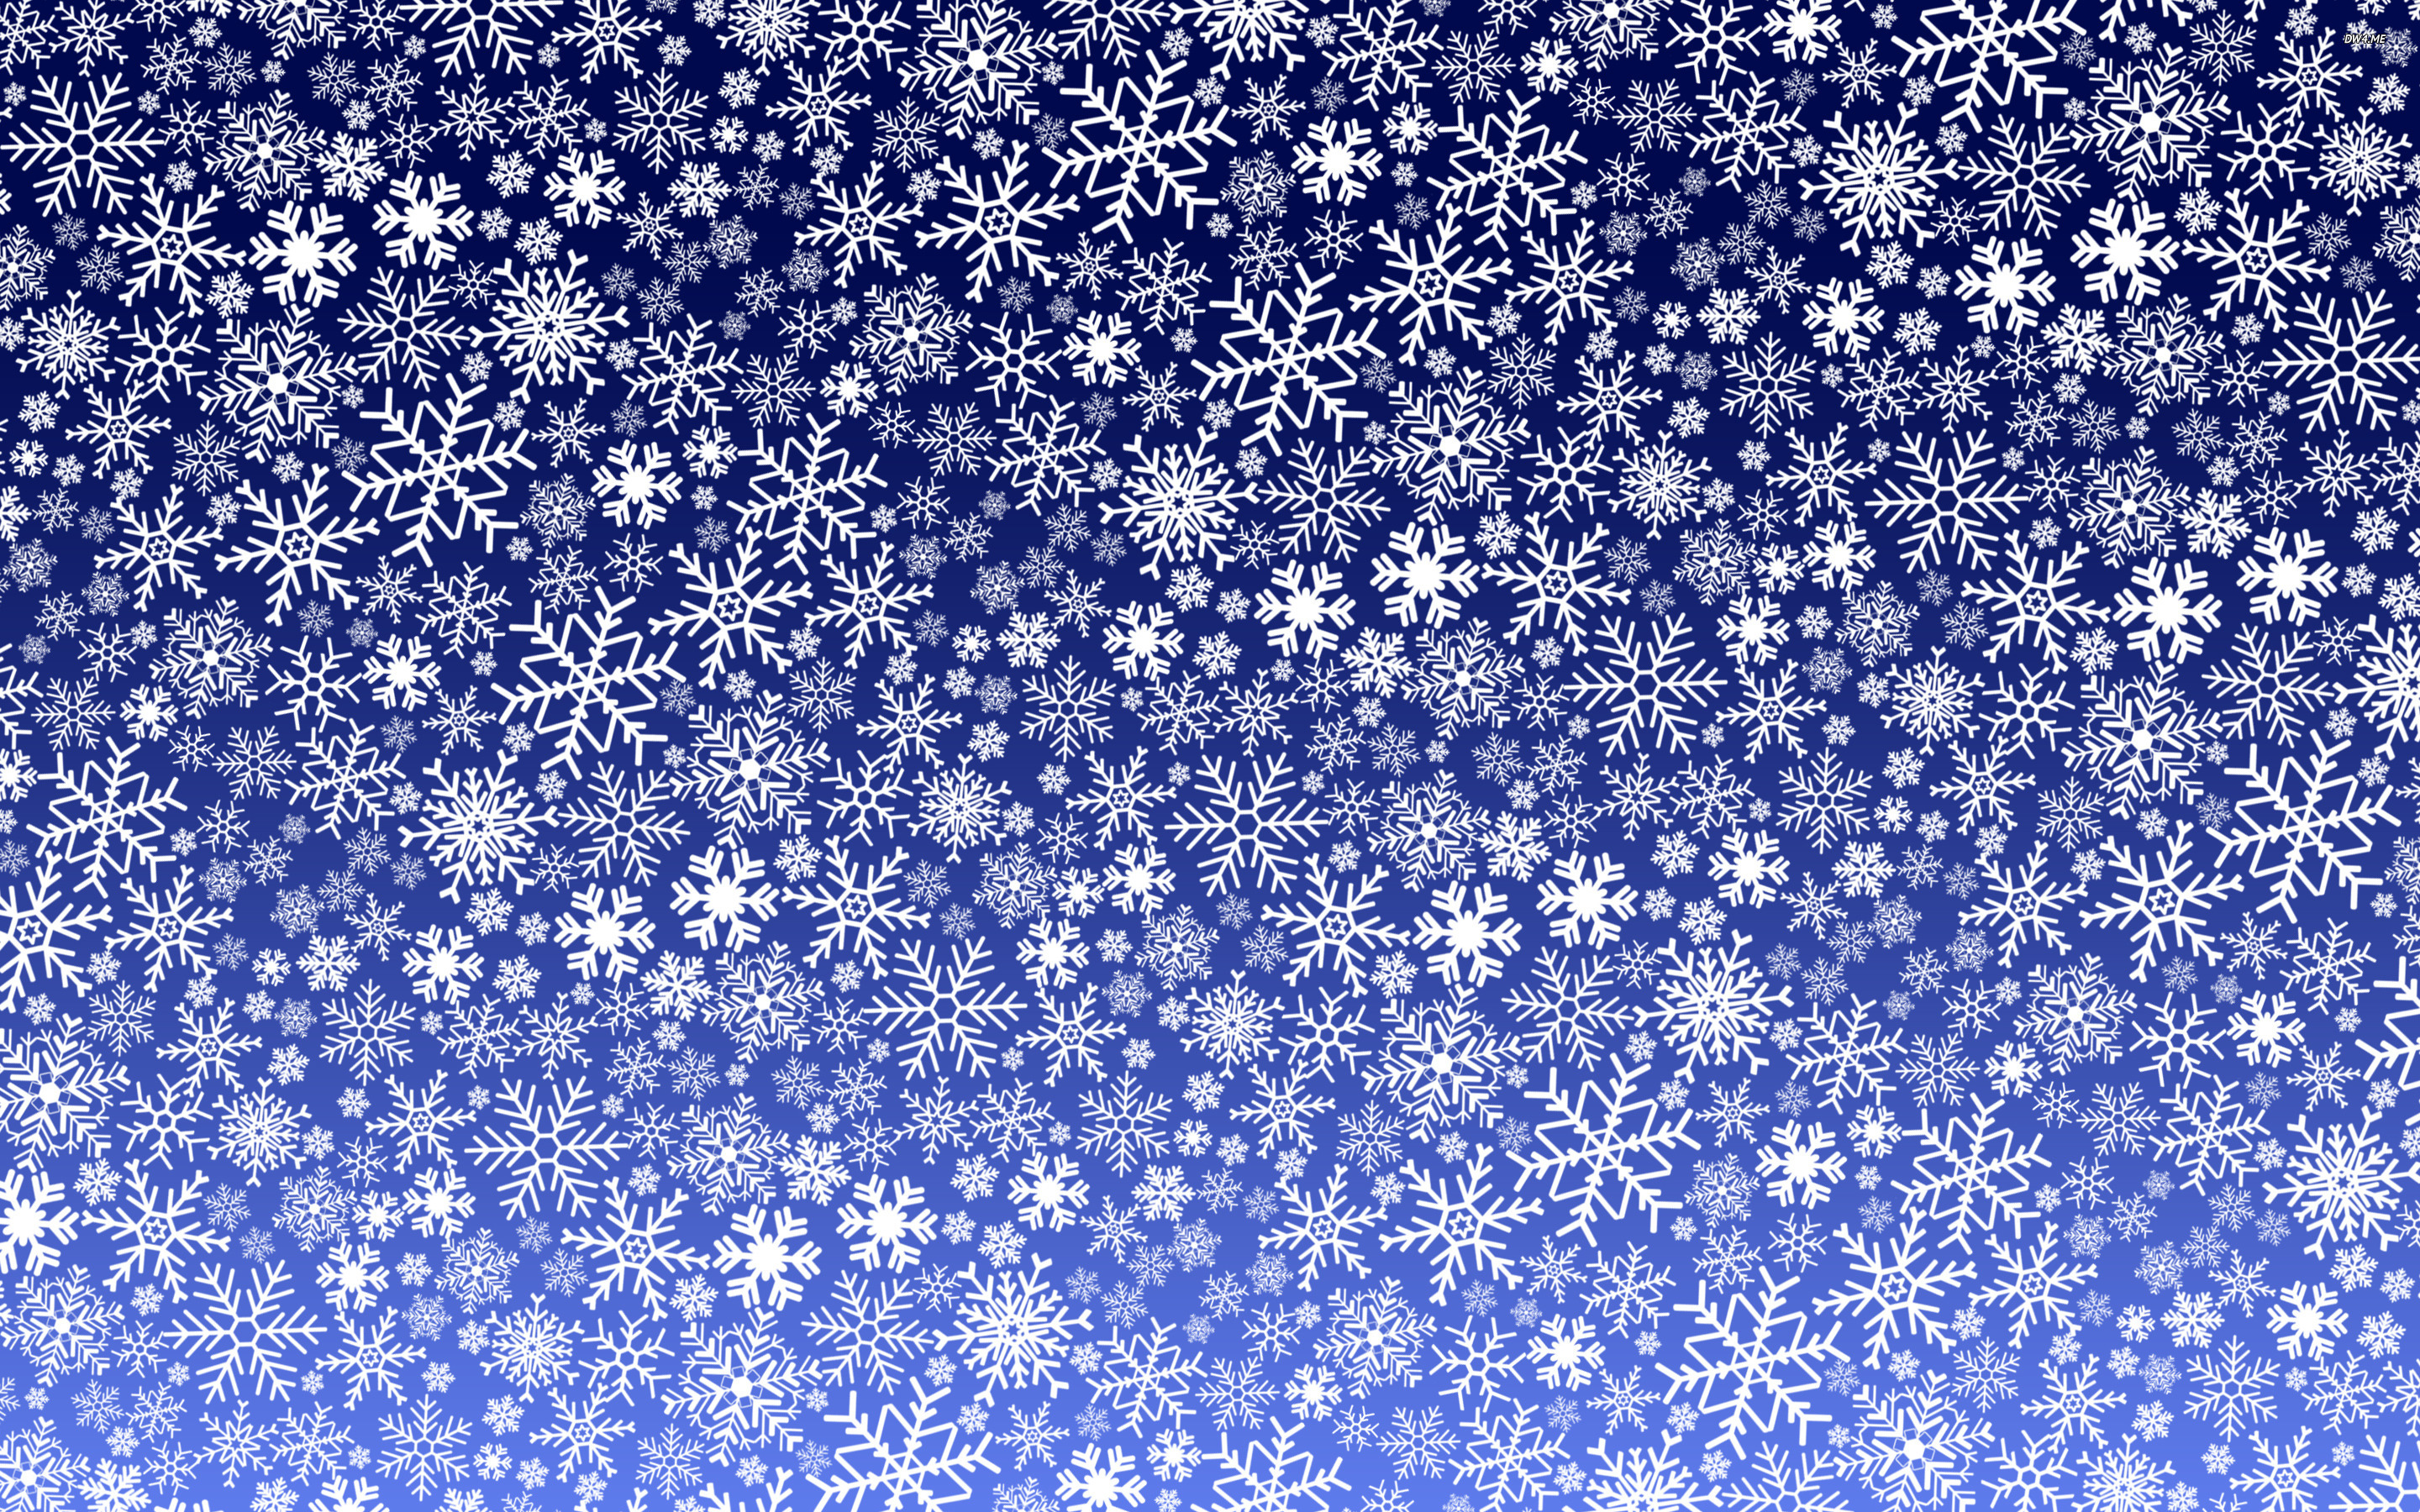 Snowflake in winters 2K wallpaper download